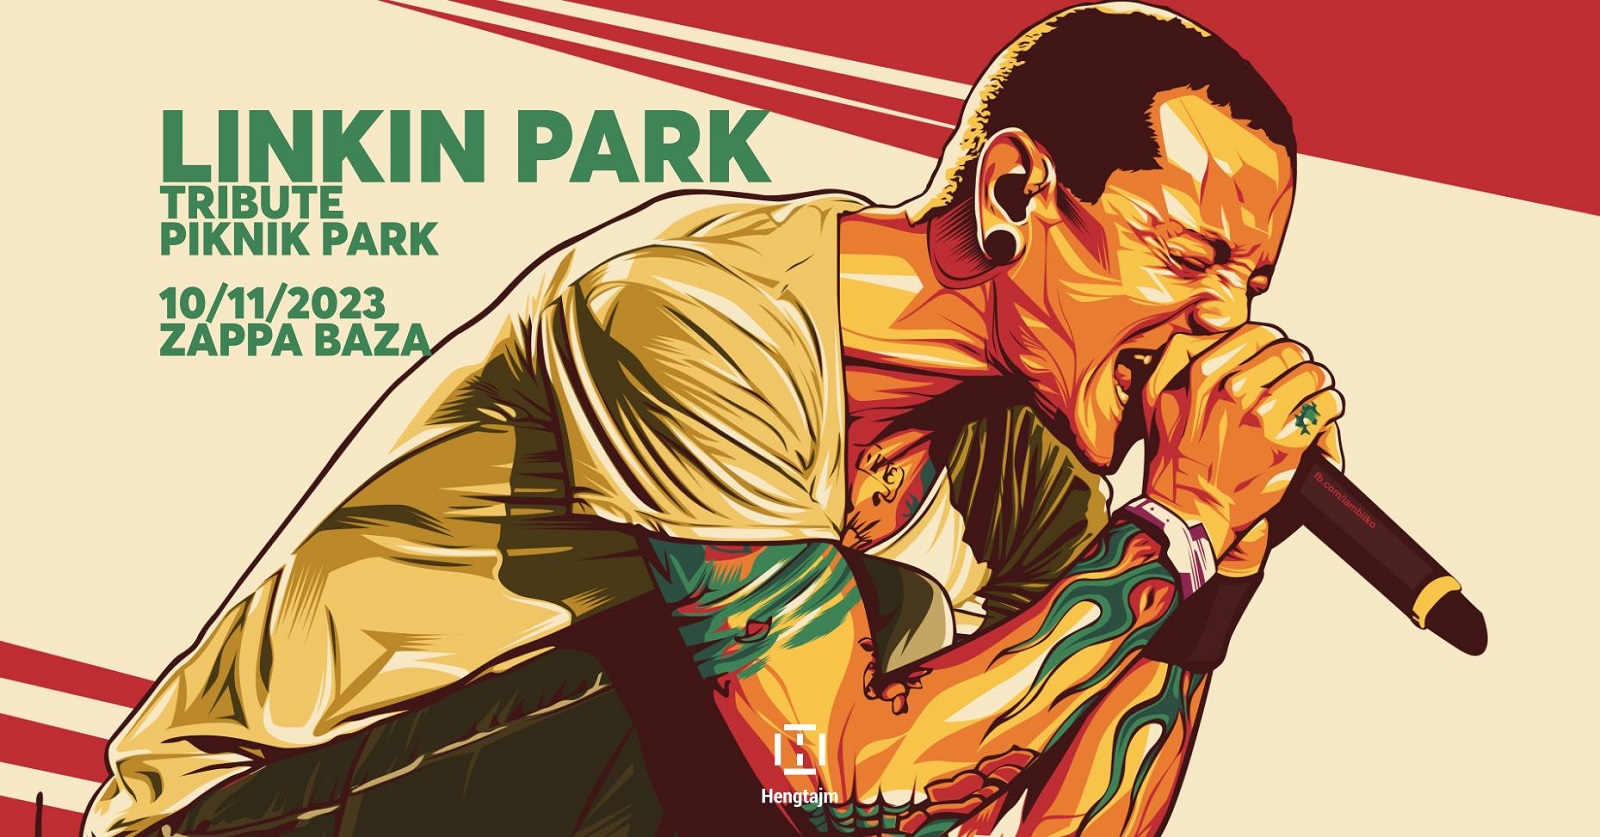 Linkin Park tribute // Zappa Baza